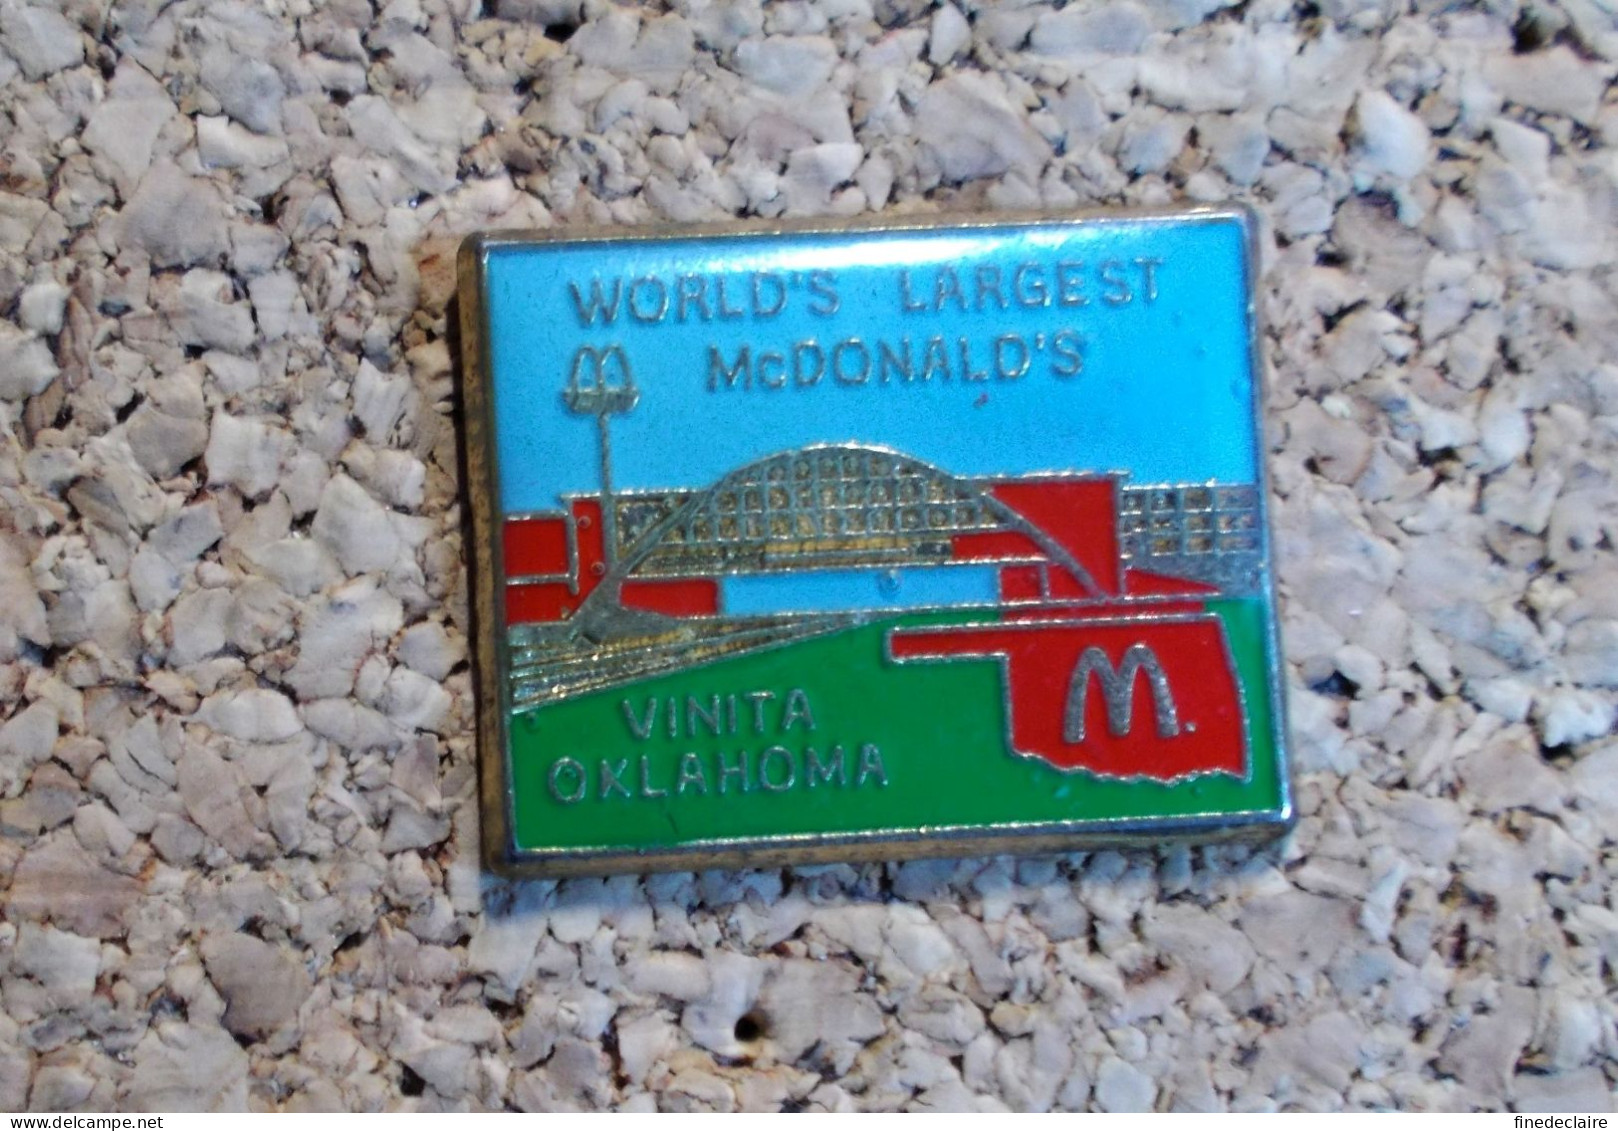 Pin's - World Largest McDonal's Vinita Oklahoma - McDonald's